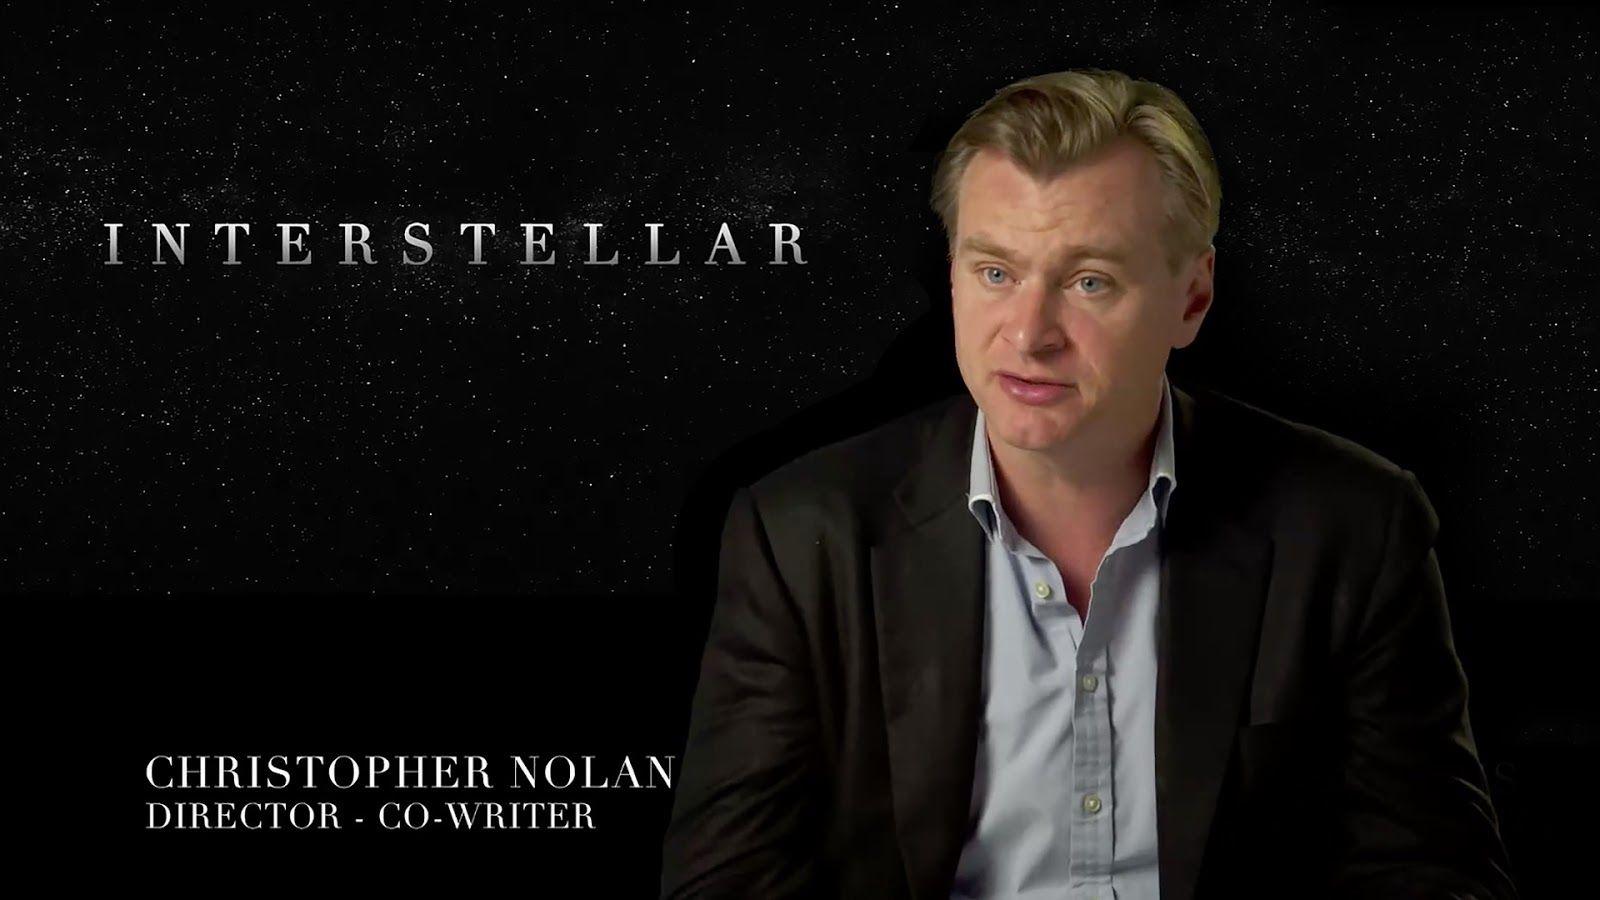 Christopher Nolan HQ Background. World's Greatest Art Site